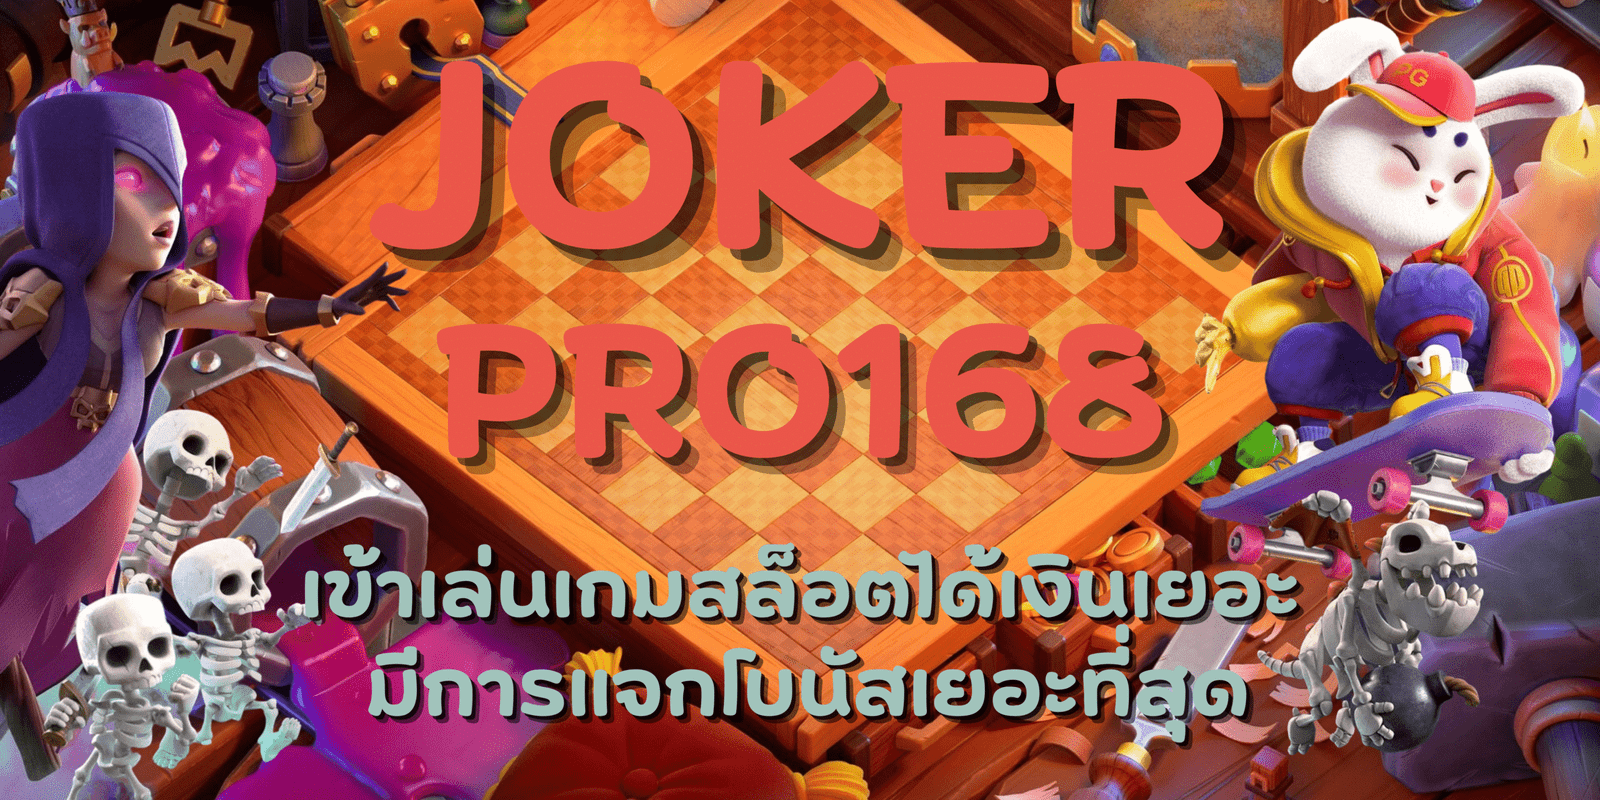 joker-pro168-เล่นเกมสล็อตได้เงินเยอะ